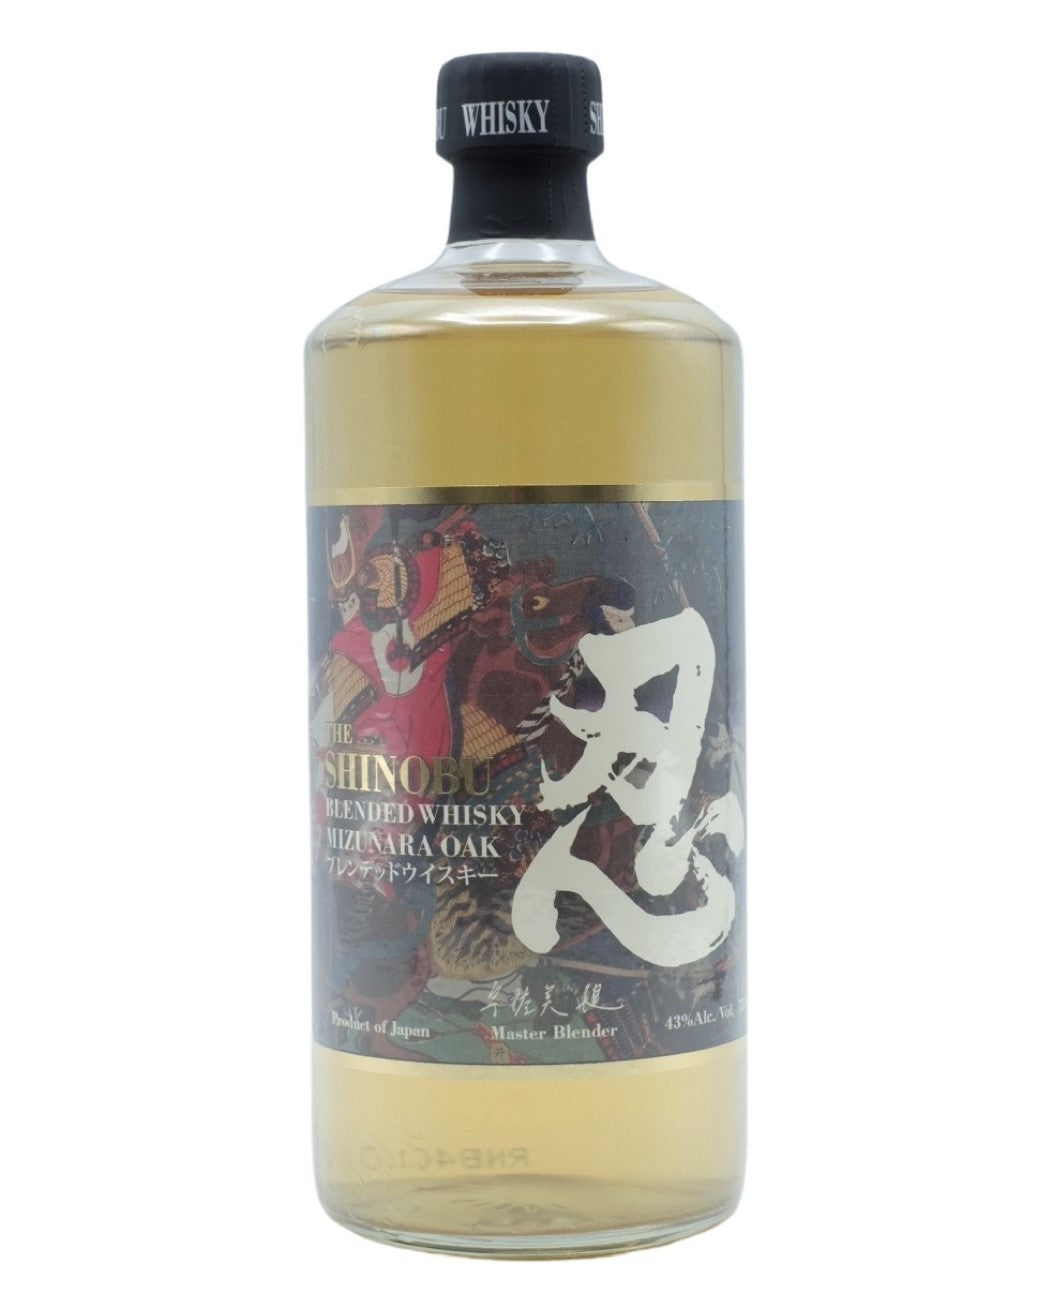 Shinobu Japanese Blended Whisky